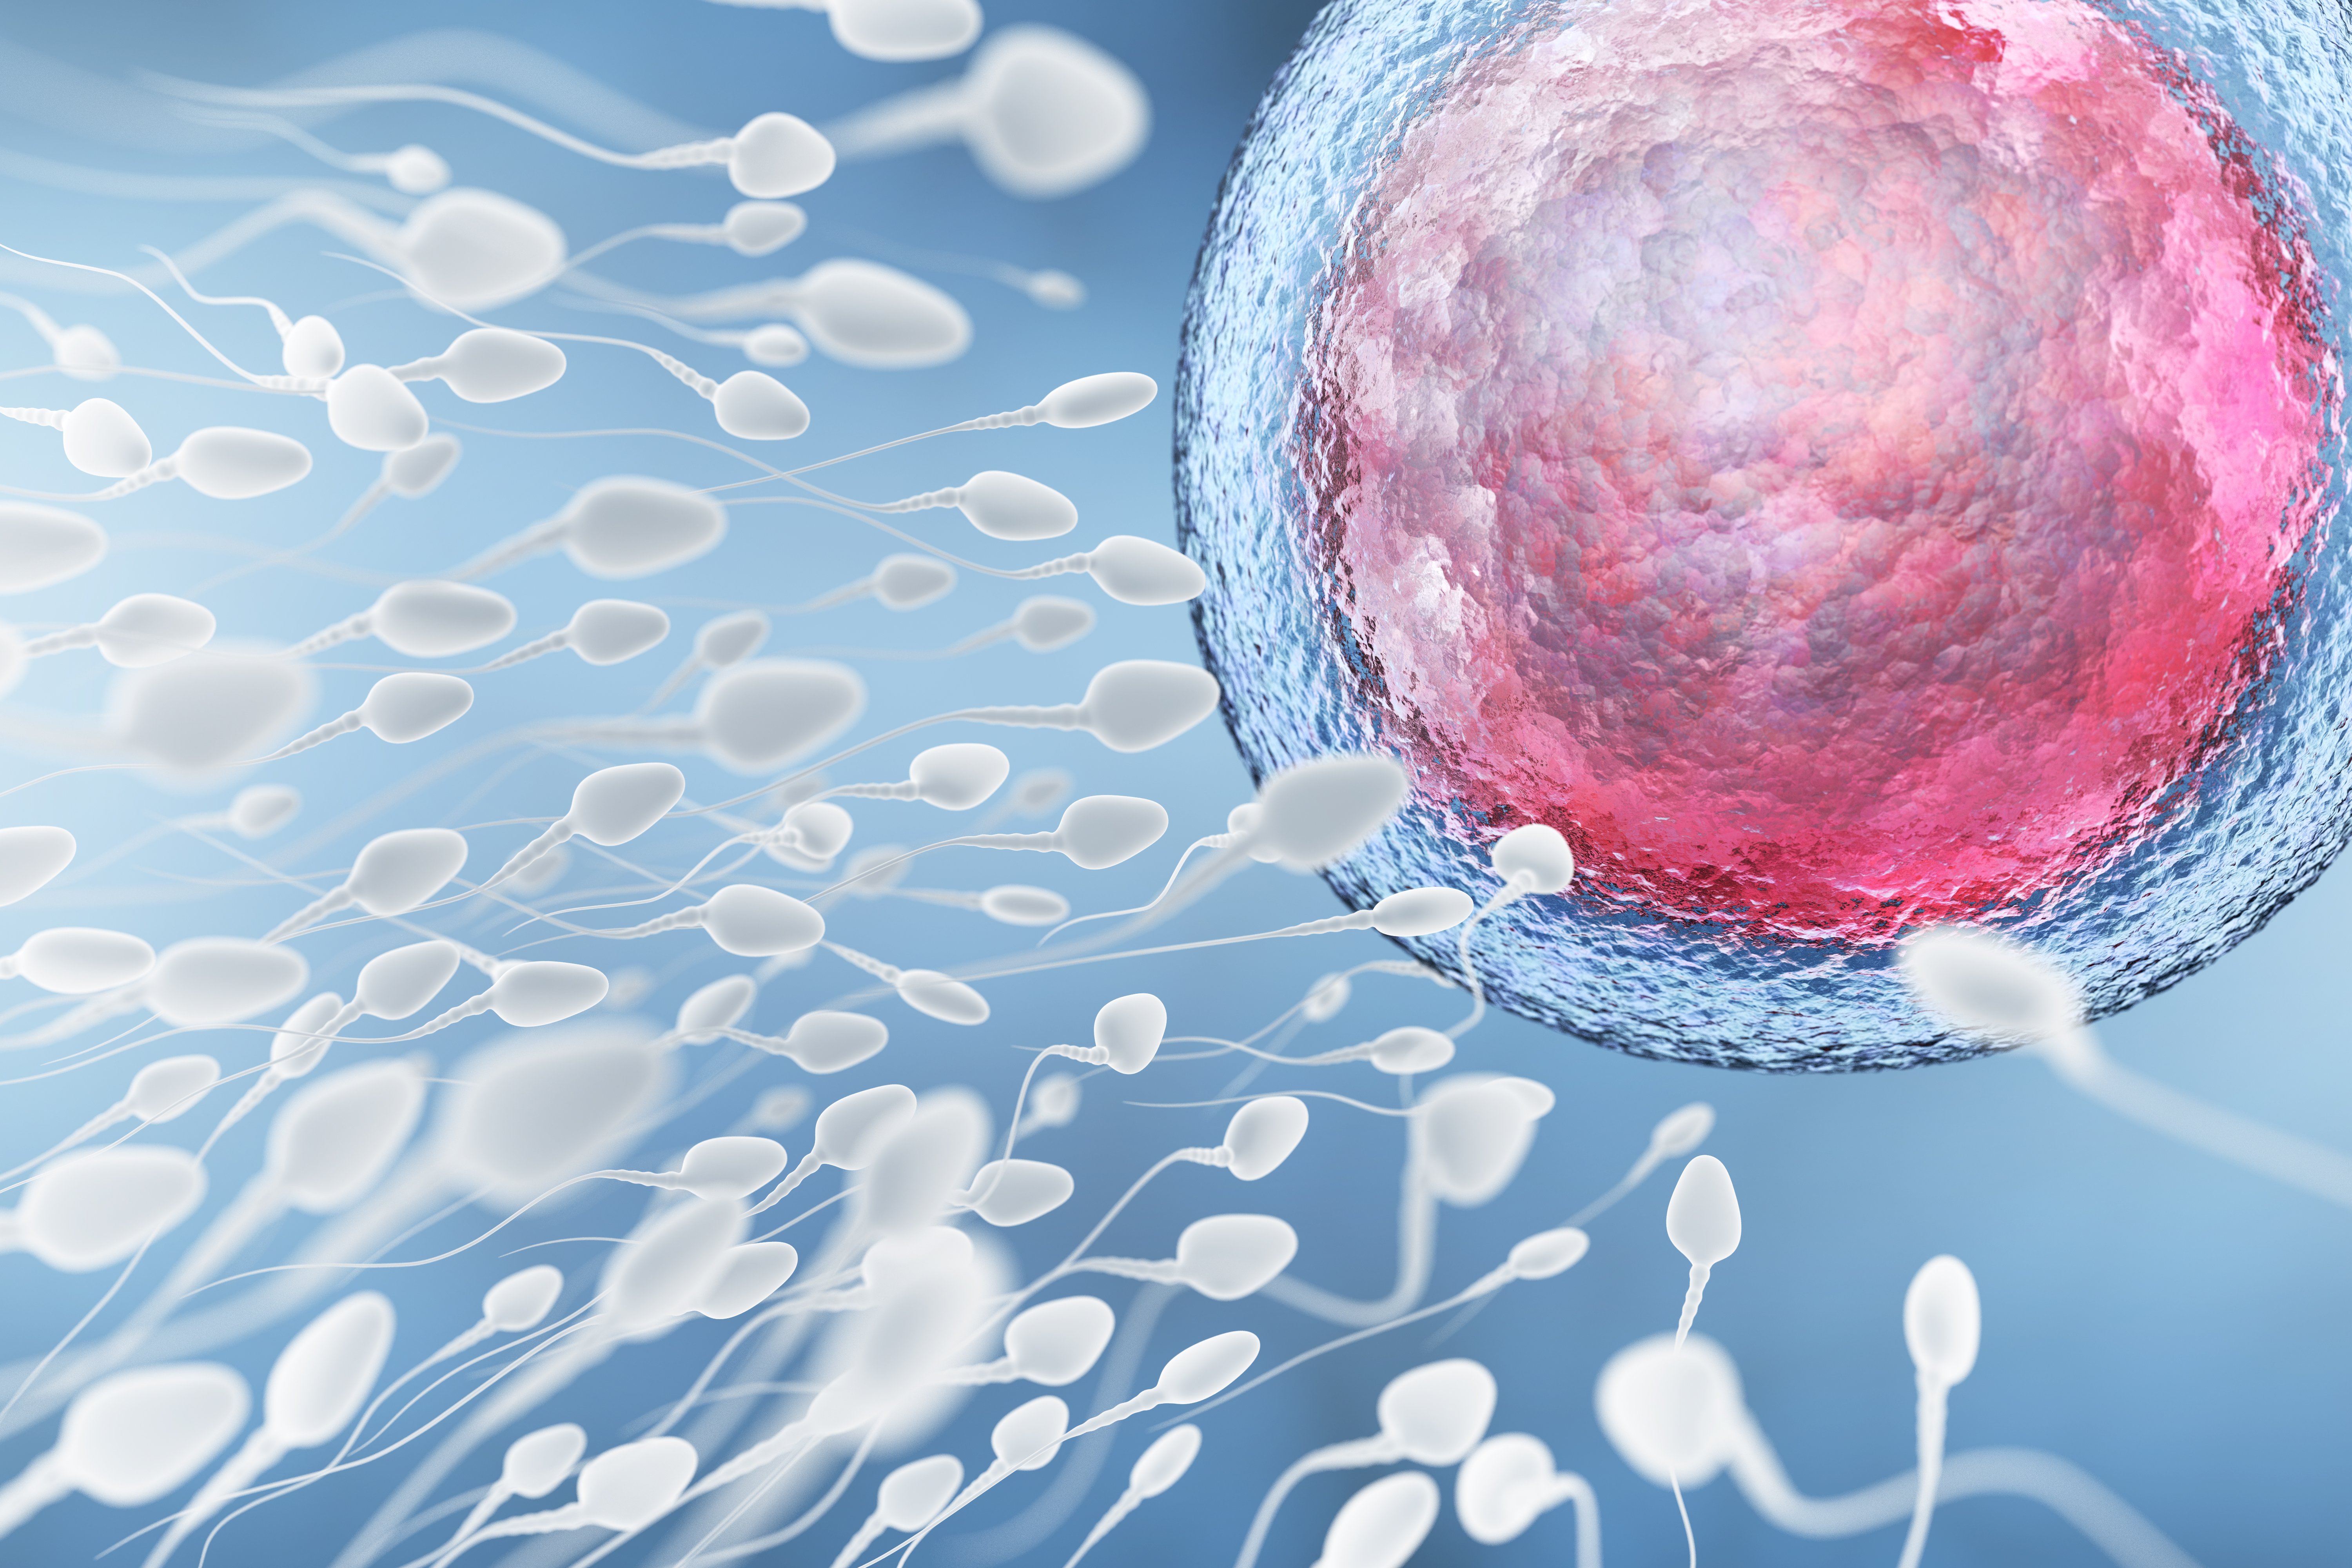 Illustration of sperm and egg cell